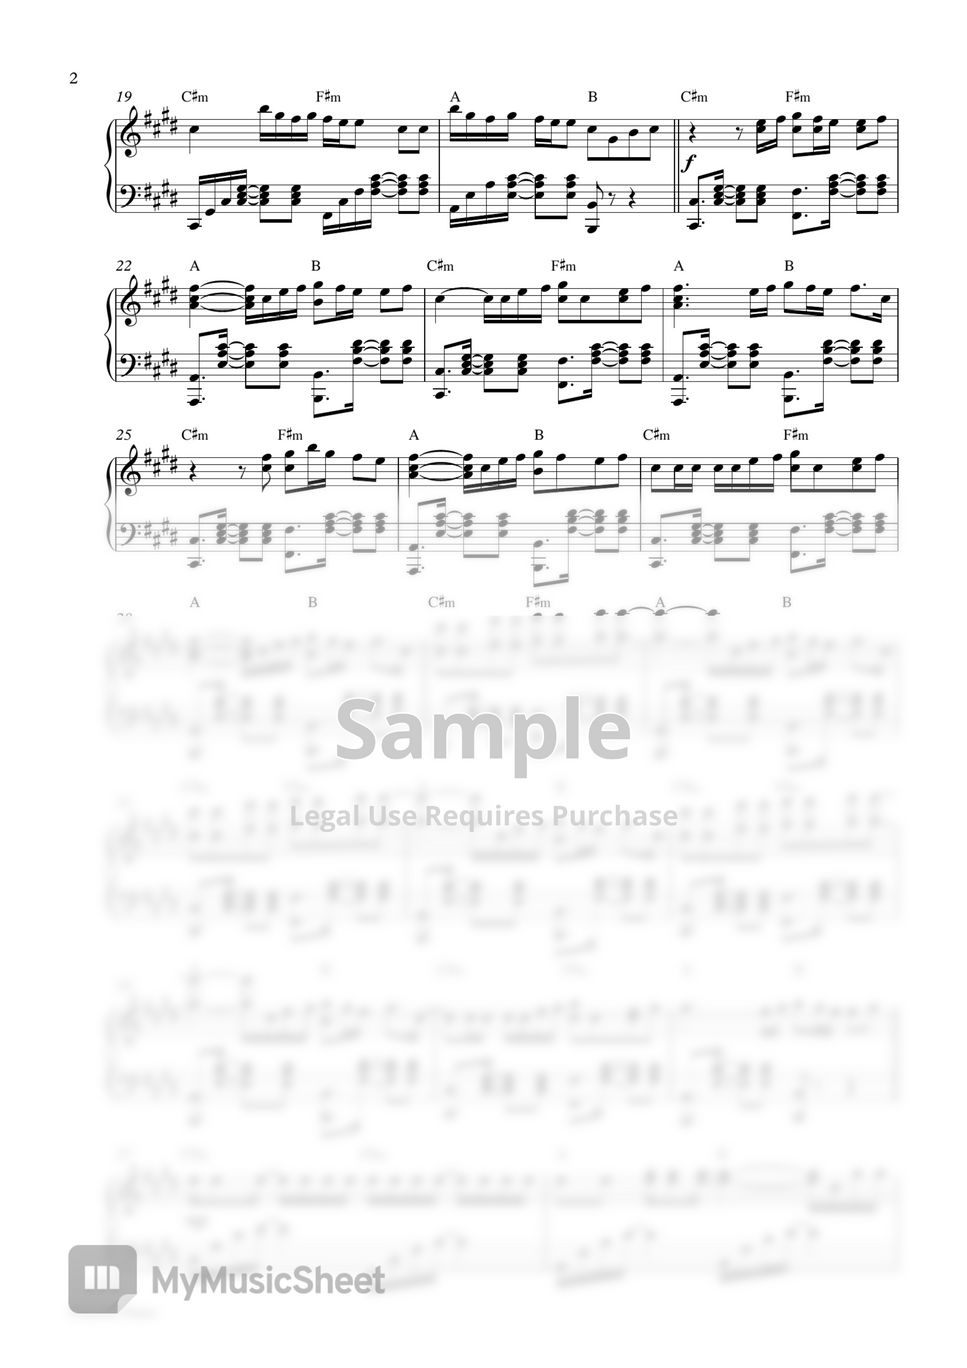 ES - SOY (Piano Sheet) by Pianella Piano